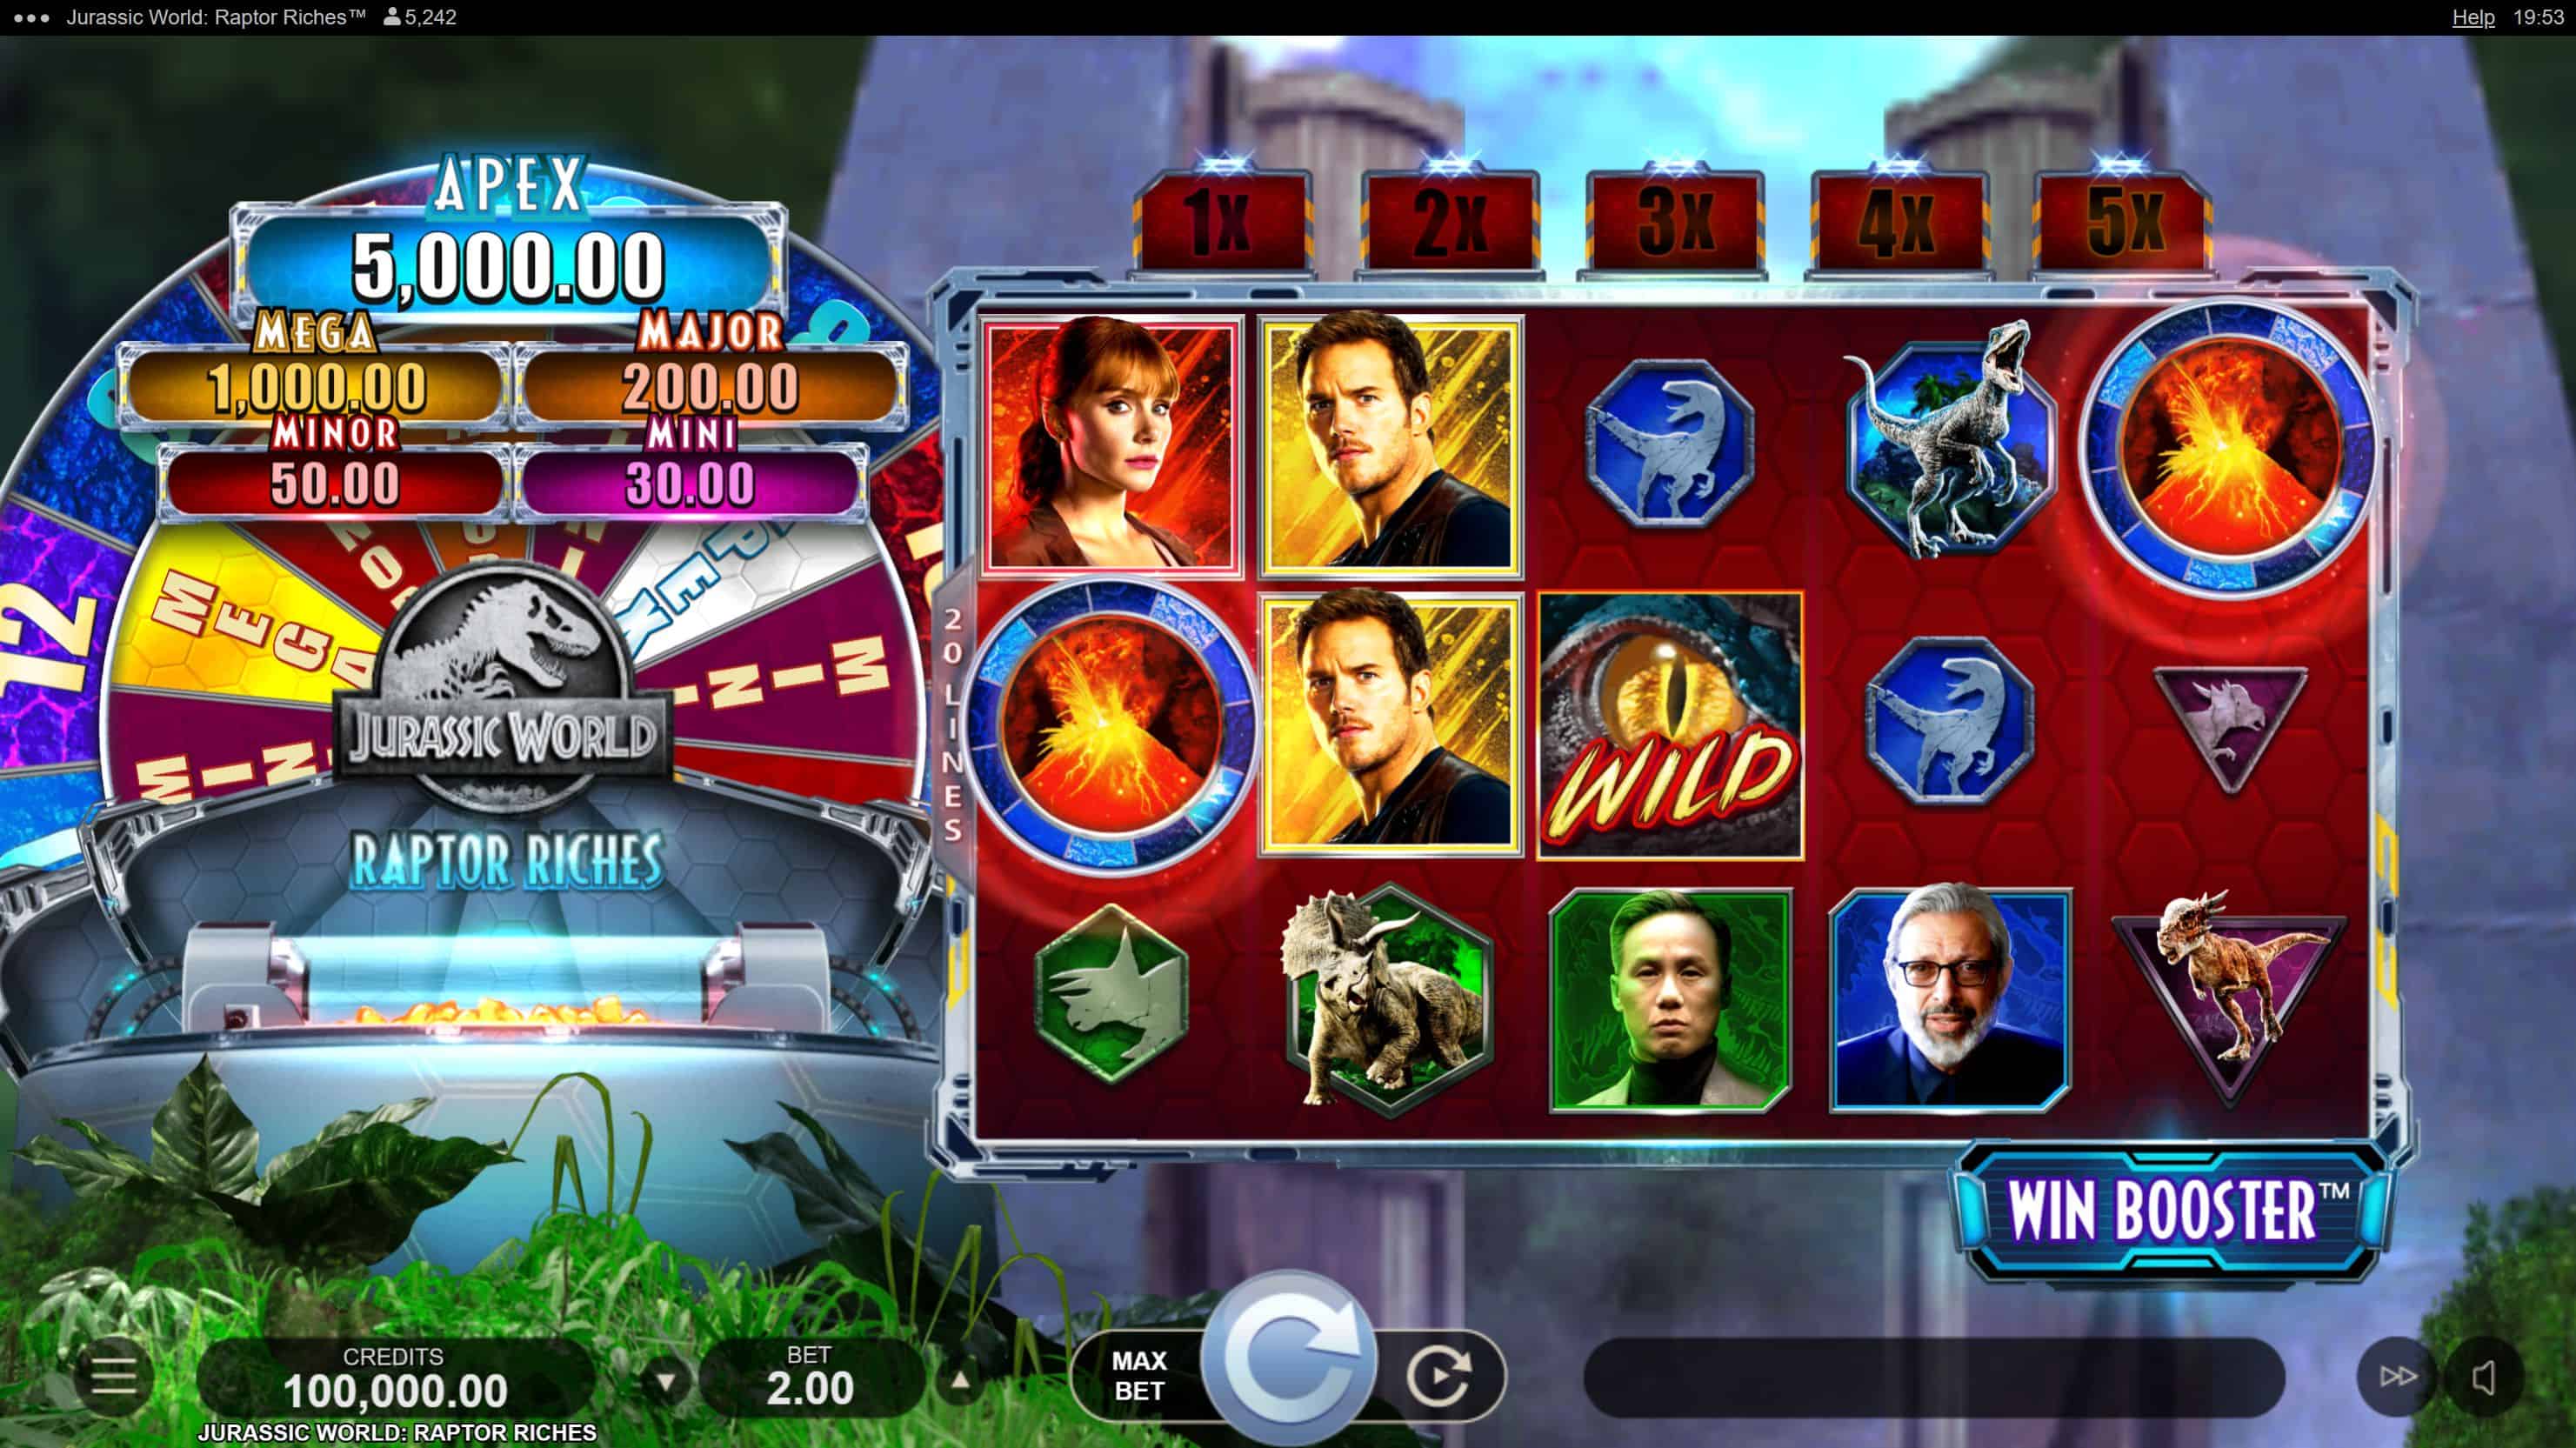 Jurassic World Raptor Riches Slot Game Free Play at Casino Ireland 01